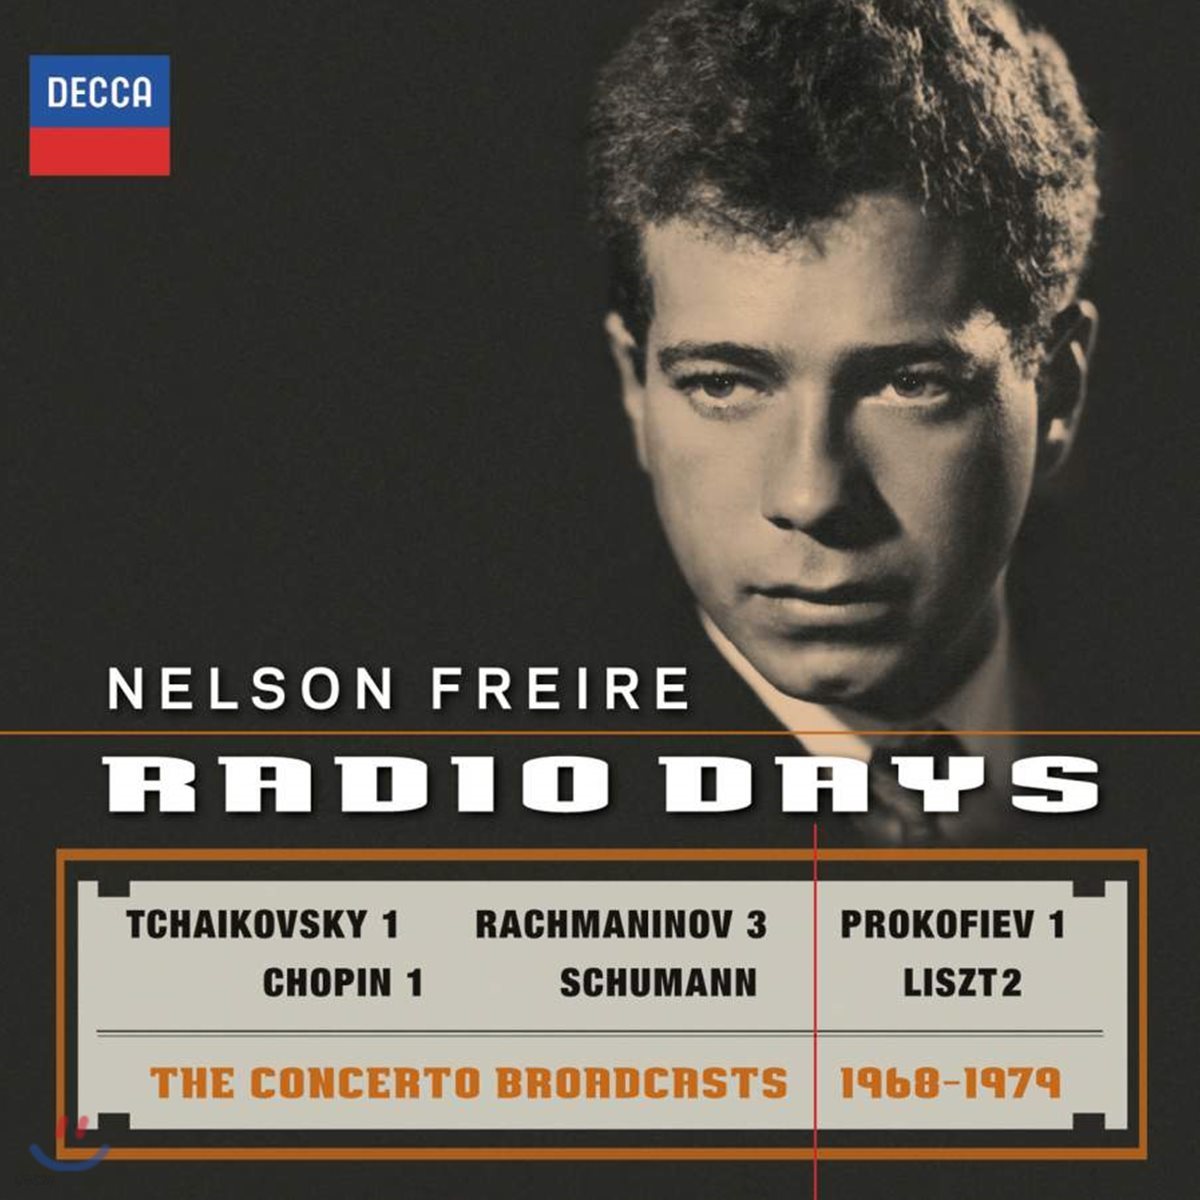 Nelson Freire 넬슨 프레이레 방송 녹음 1968-1979 (Radio Days)